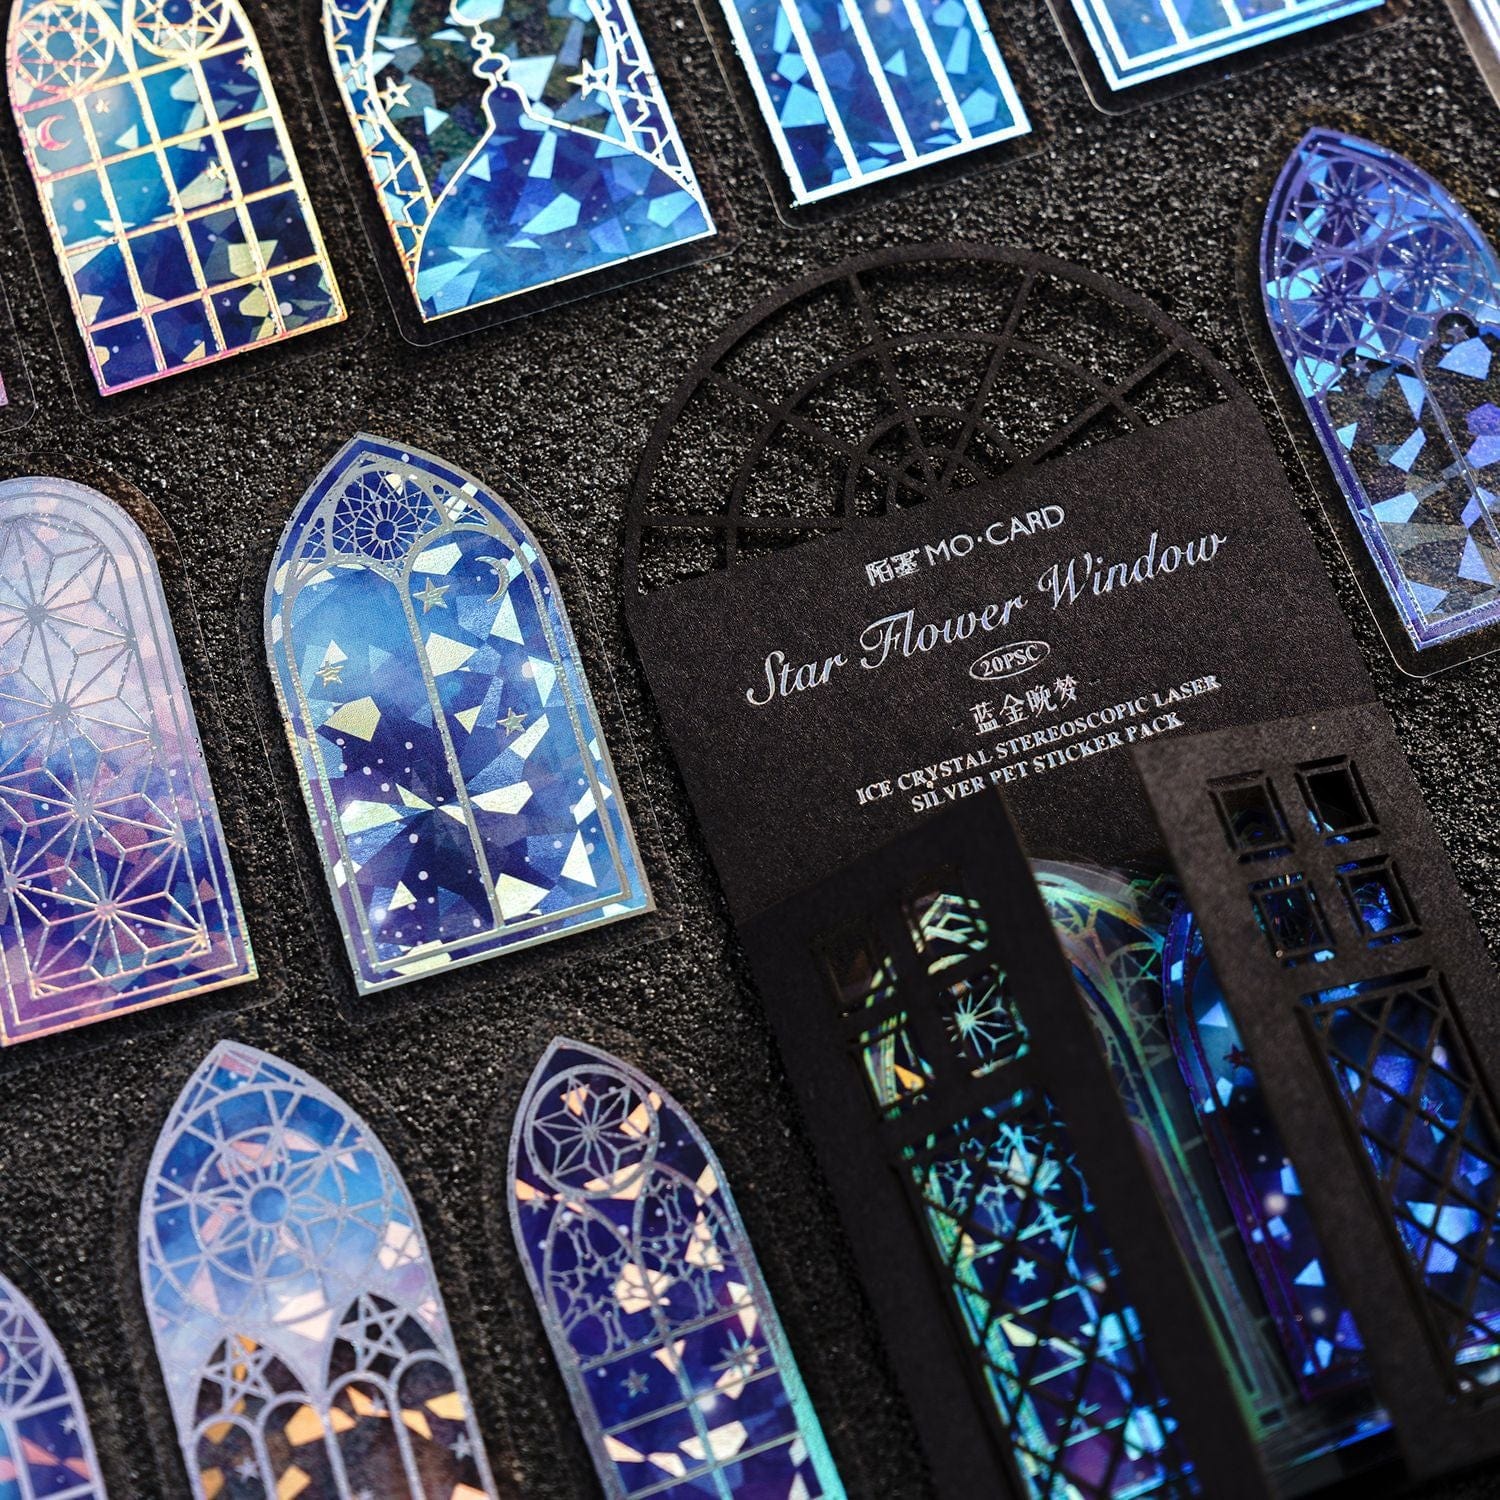 KUMA Stationery & Crafts  20pcs Holographic Stained-Glass Window Stickers